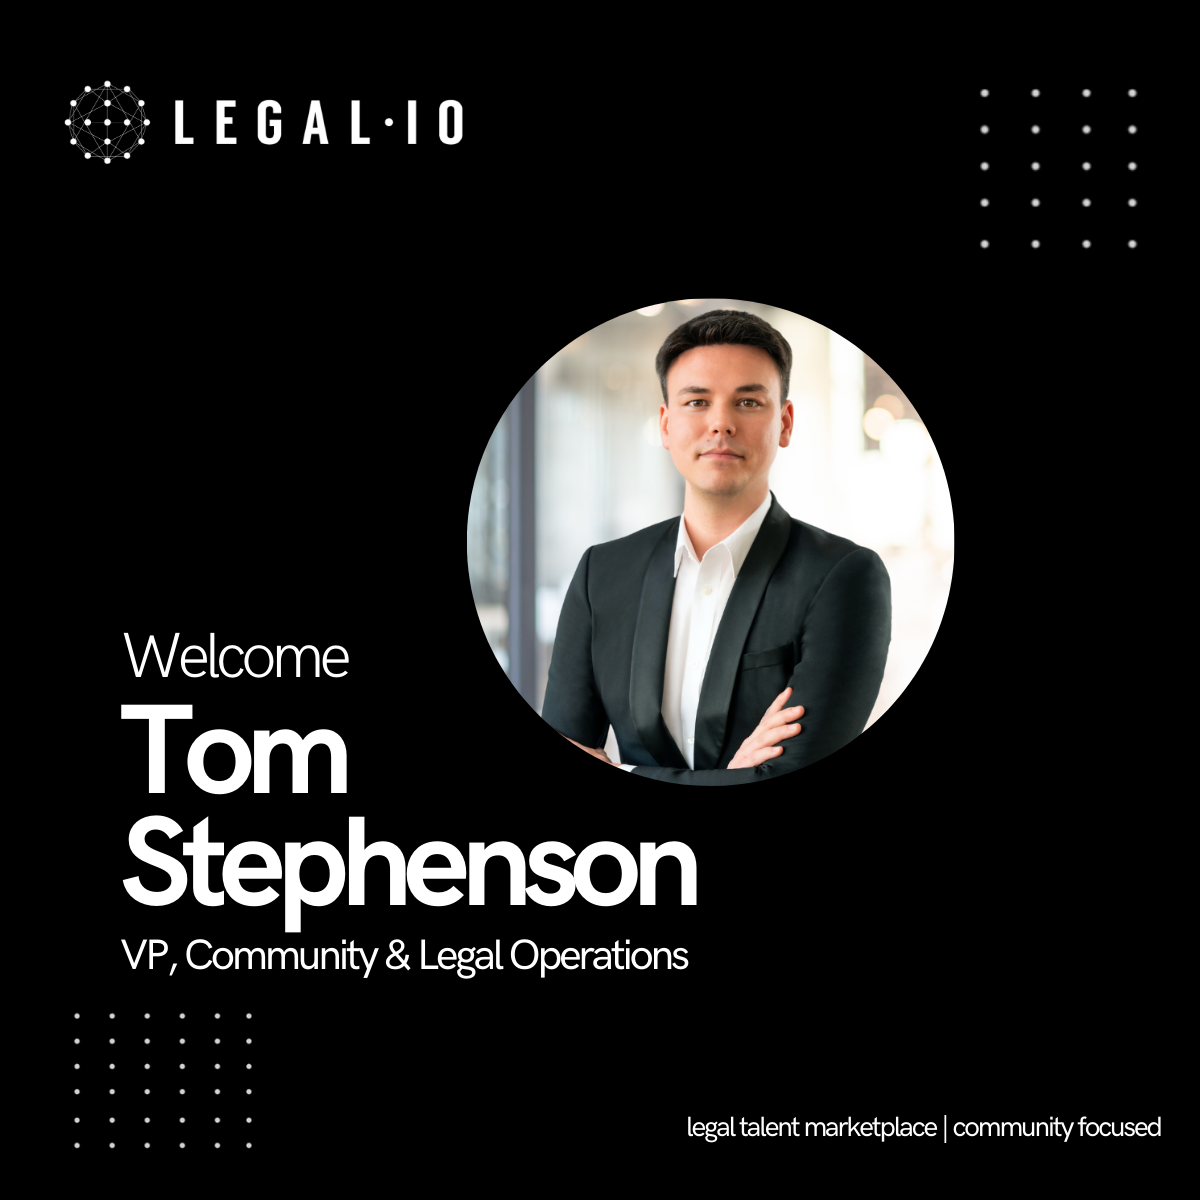 Legal.io Welcomes Tom Stephenson as VP, Community & Legal Operations